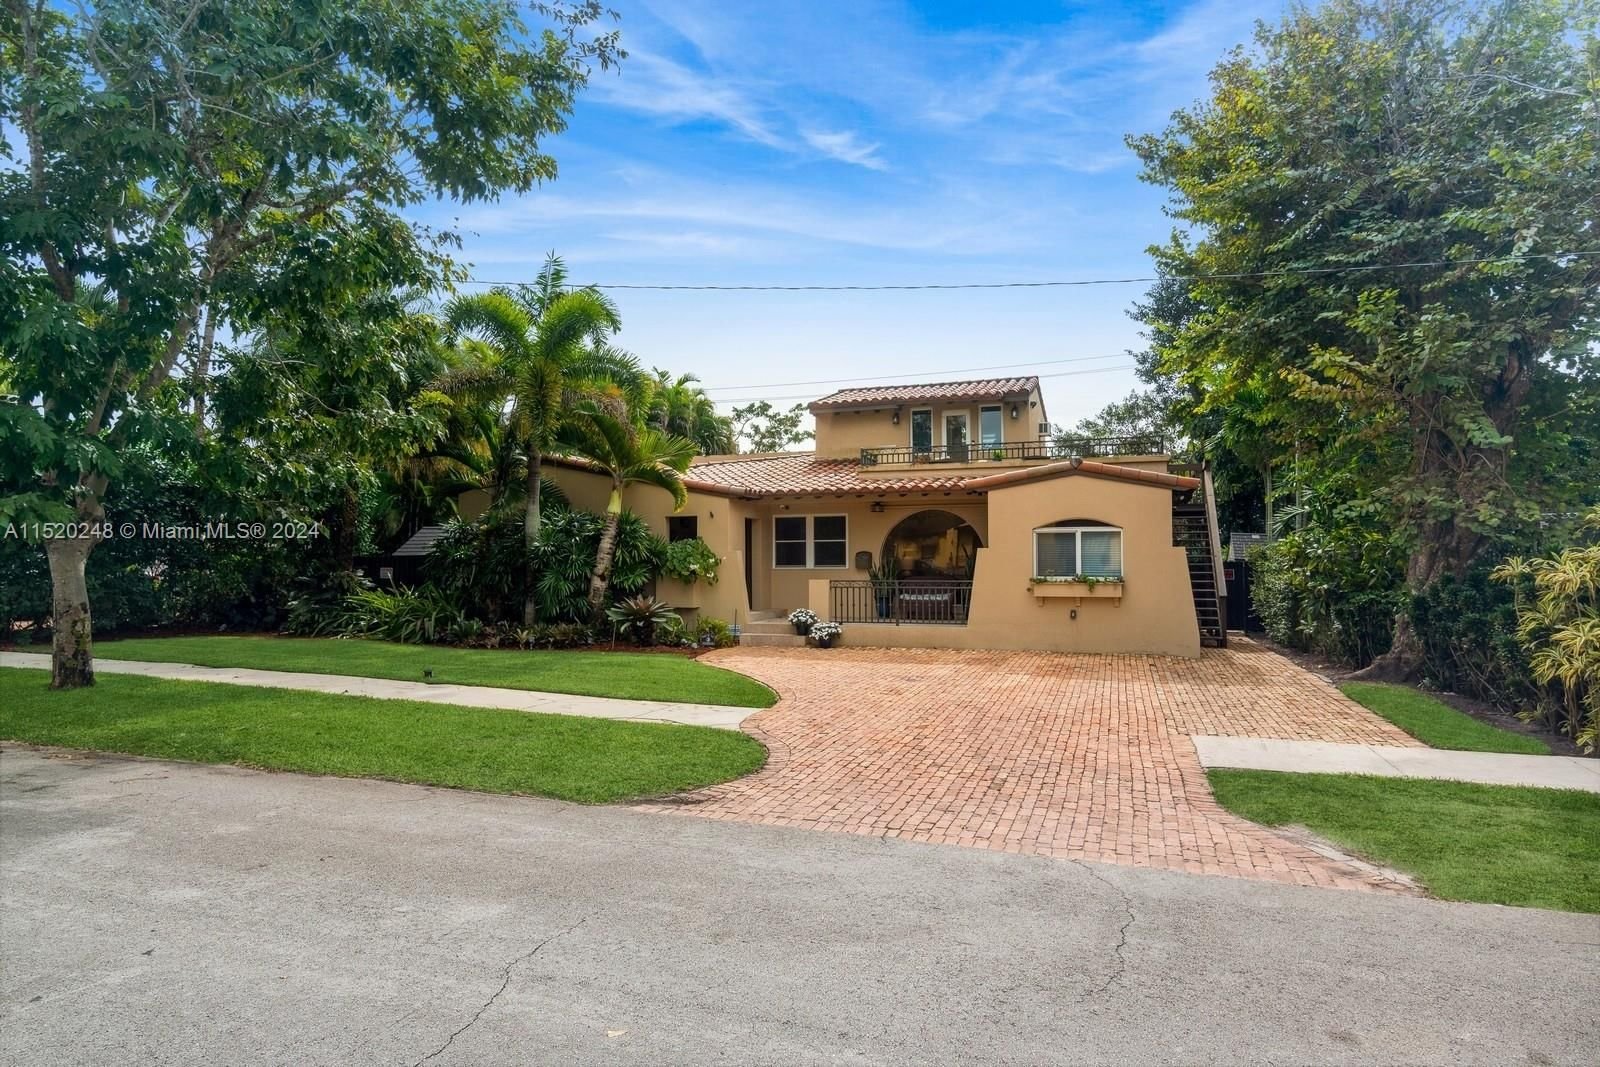 Real estate property located at 4664 14th St, Miami-Dade County, BUSCH SUB, Miami, FL